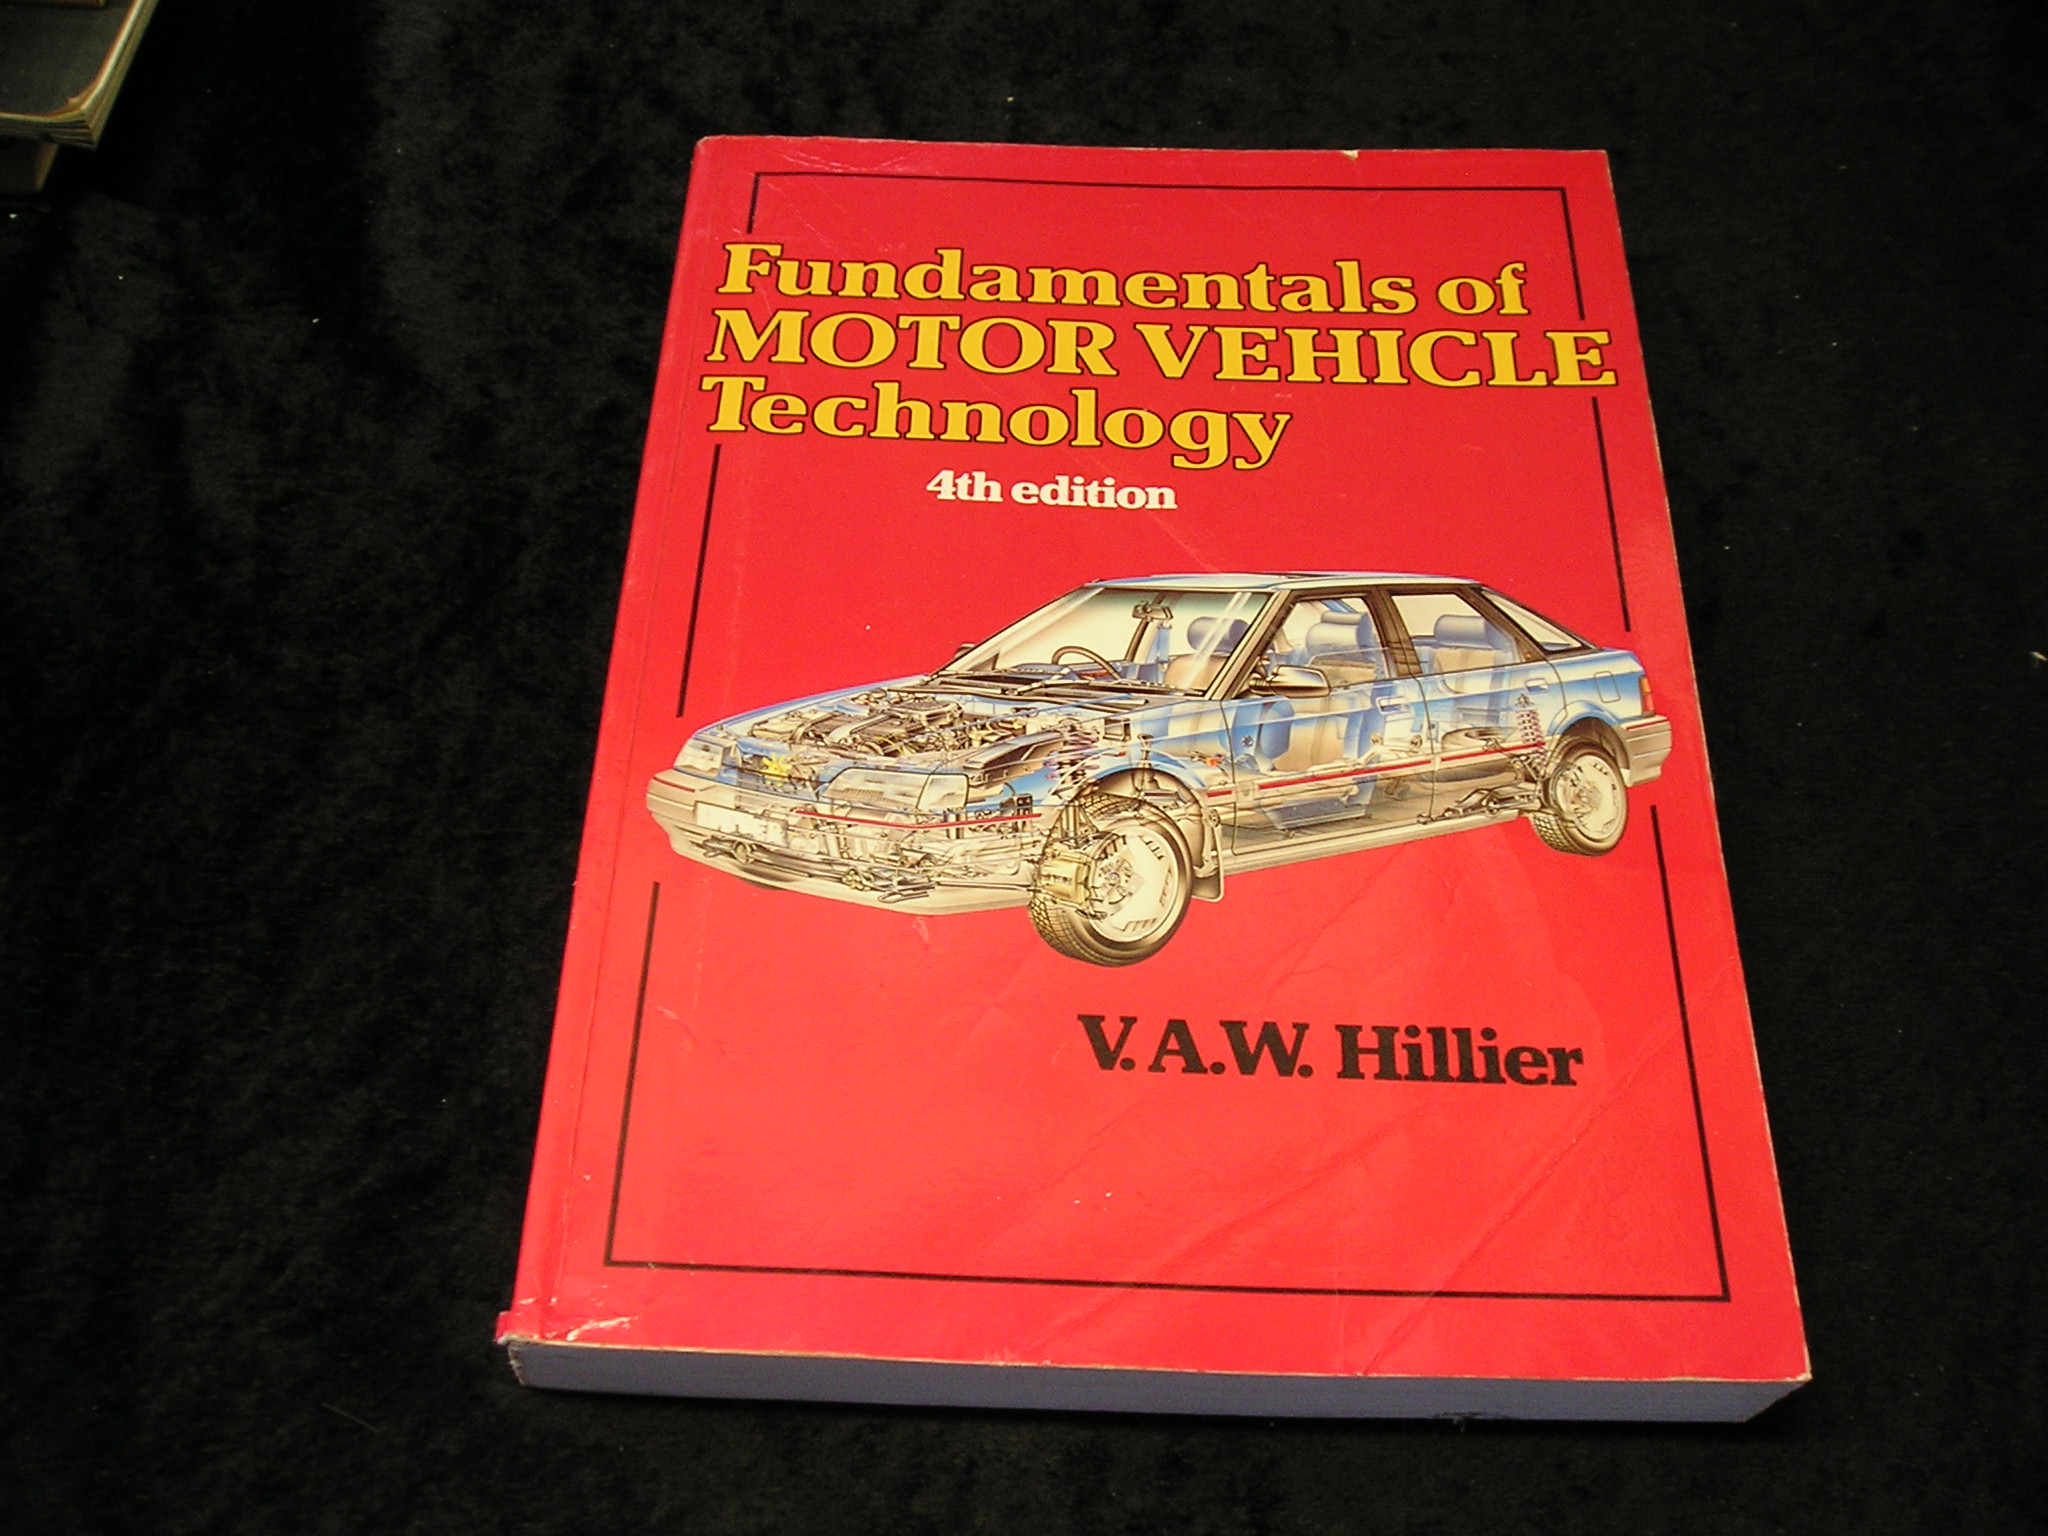 Fundamentals of Motor Vehicle Technology